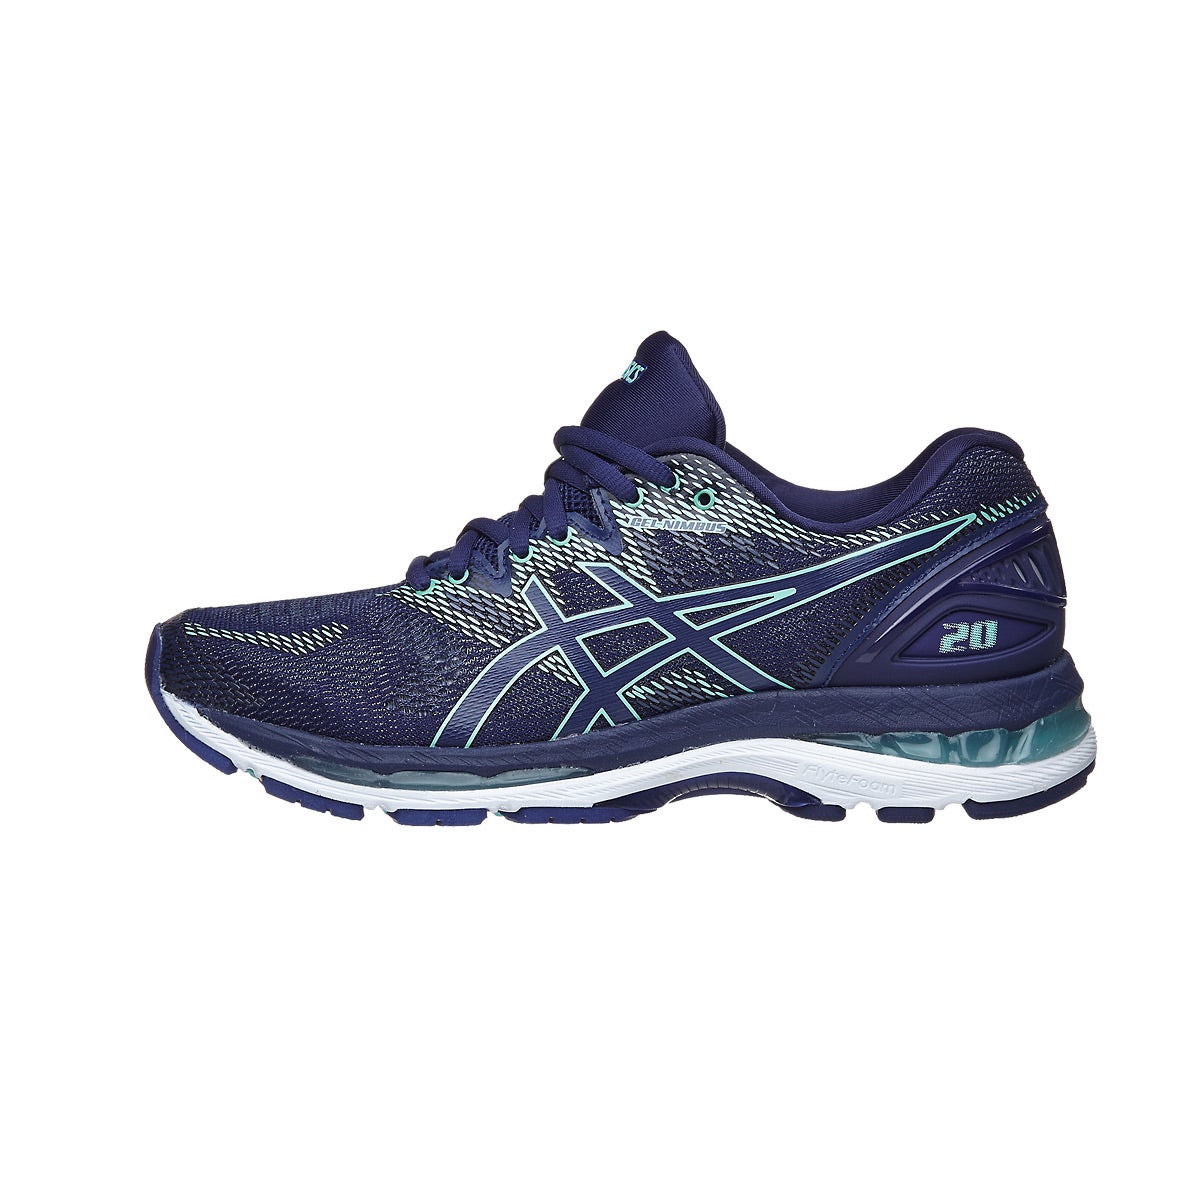 ASICS Gel Nimbus 20 Women's Shoes Indigo Blue/Green 360° View | Running ...